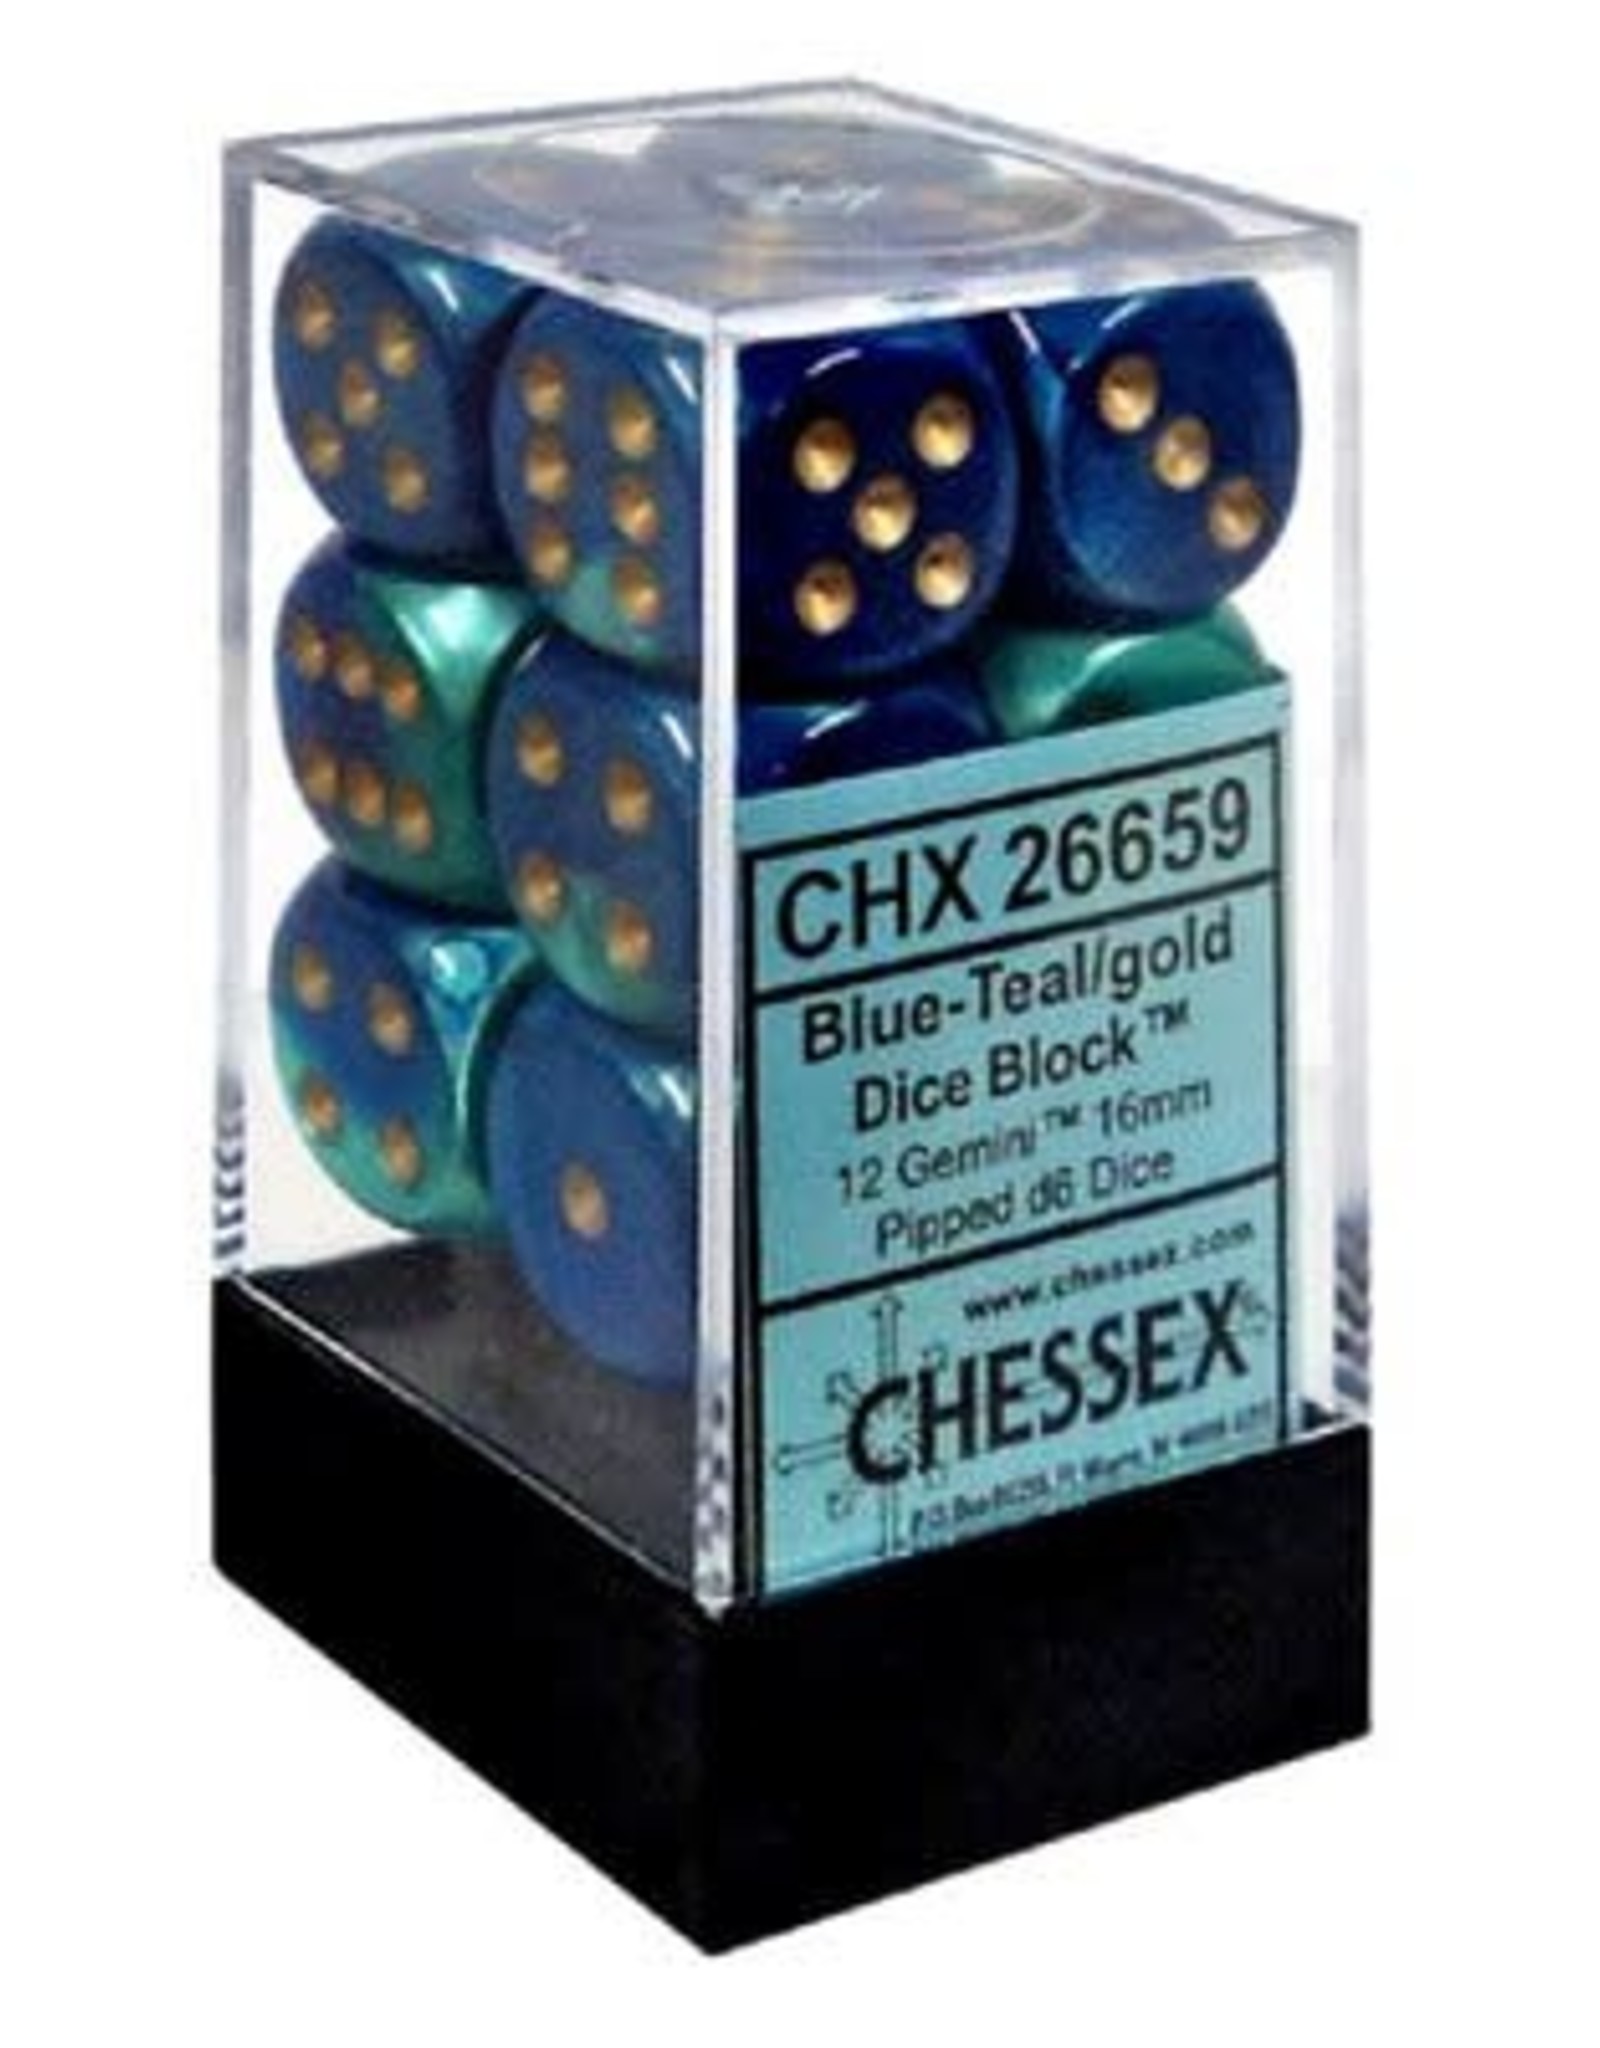 Chessex Dice - 12D6 Gemini - Blue-Teal / Gold